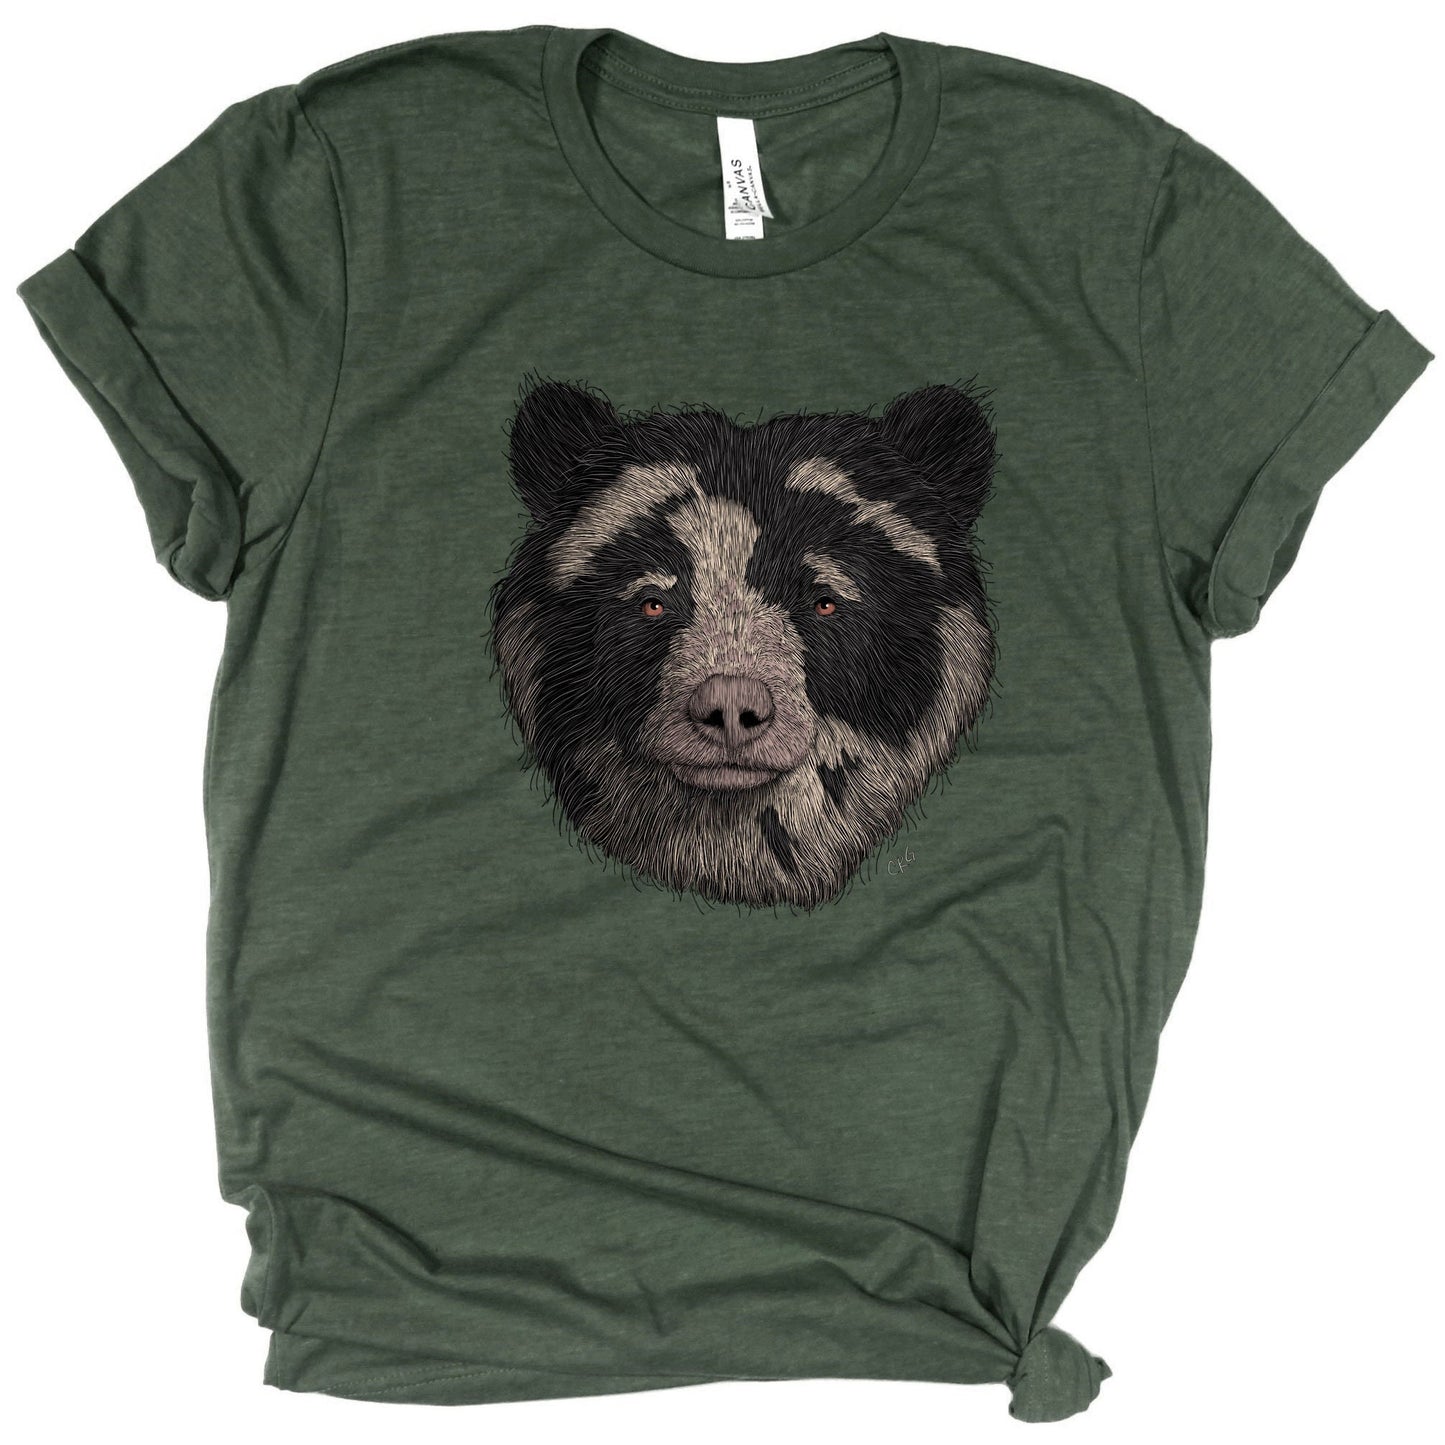 Spectacled Bear Shirt